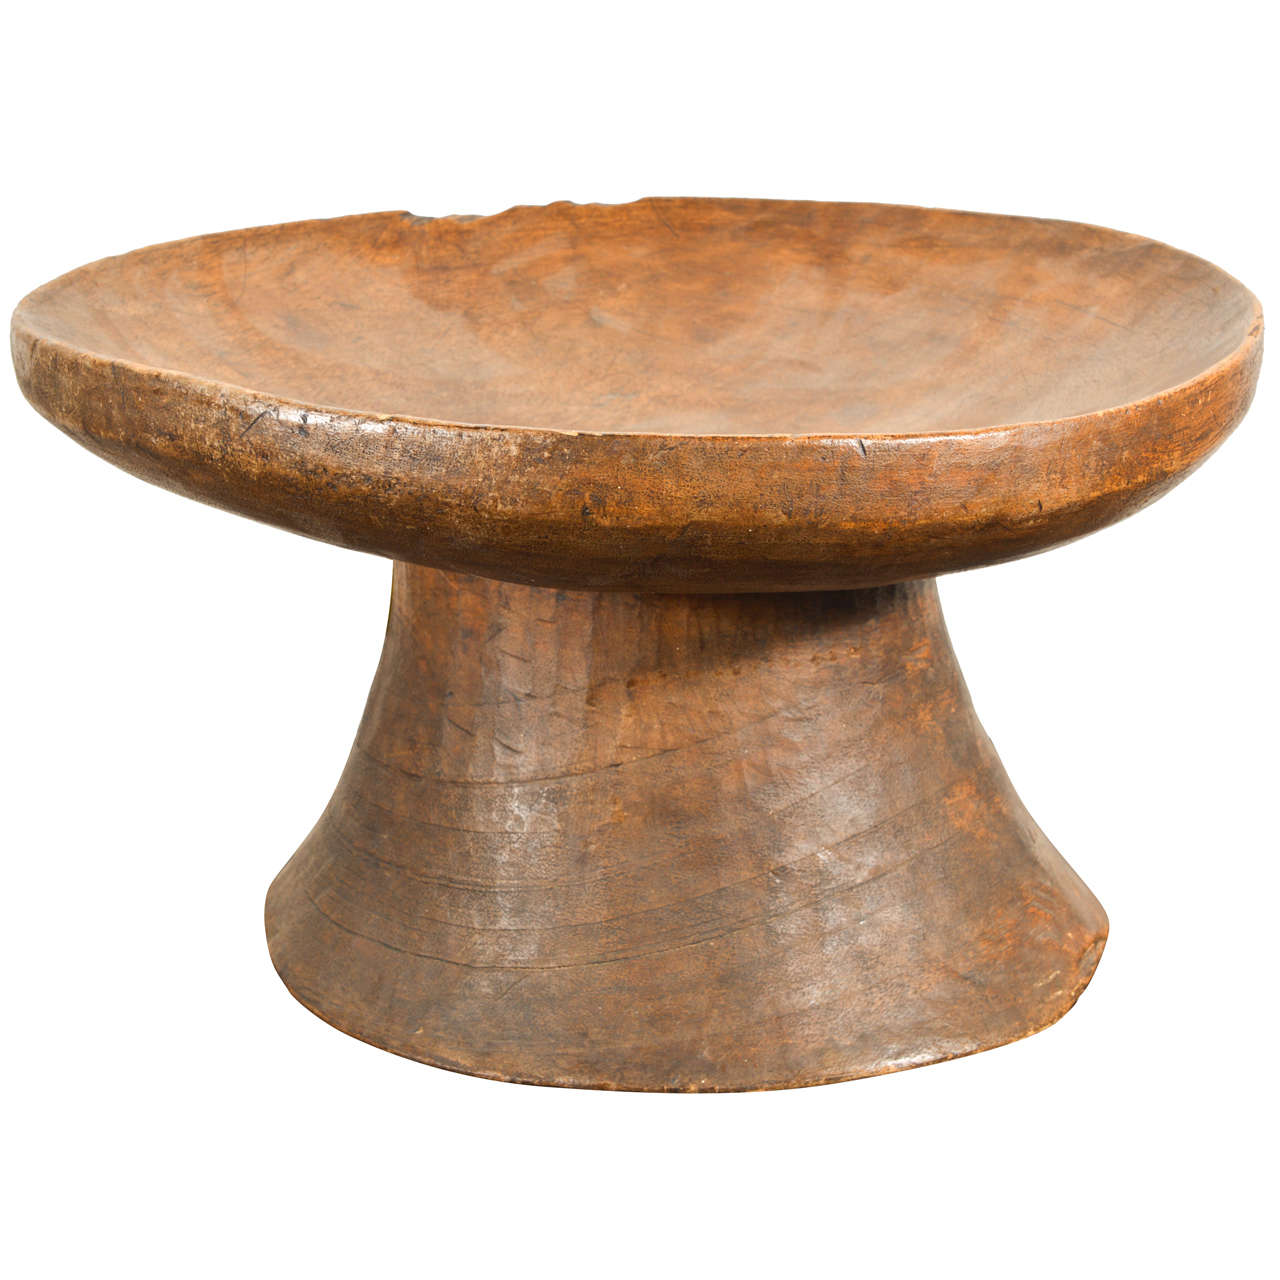 19th C. Wooden bowl on pedestal